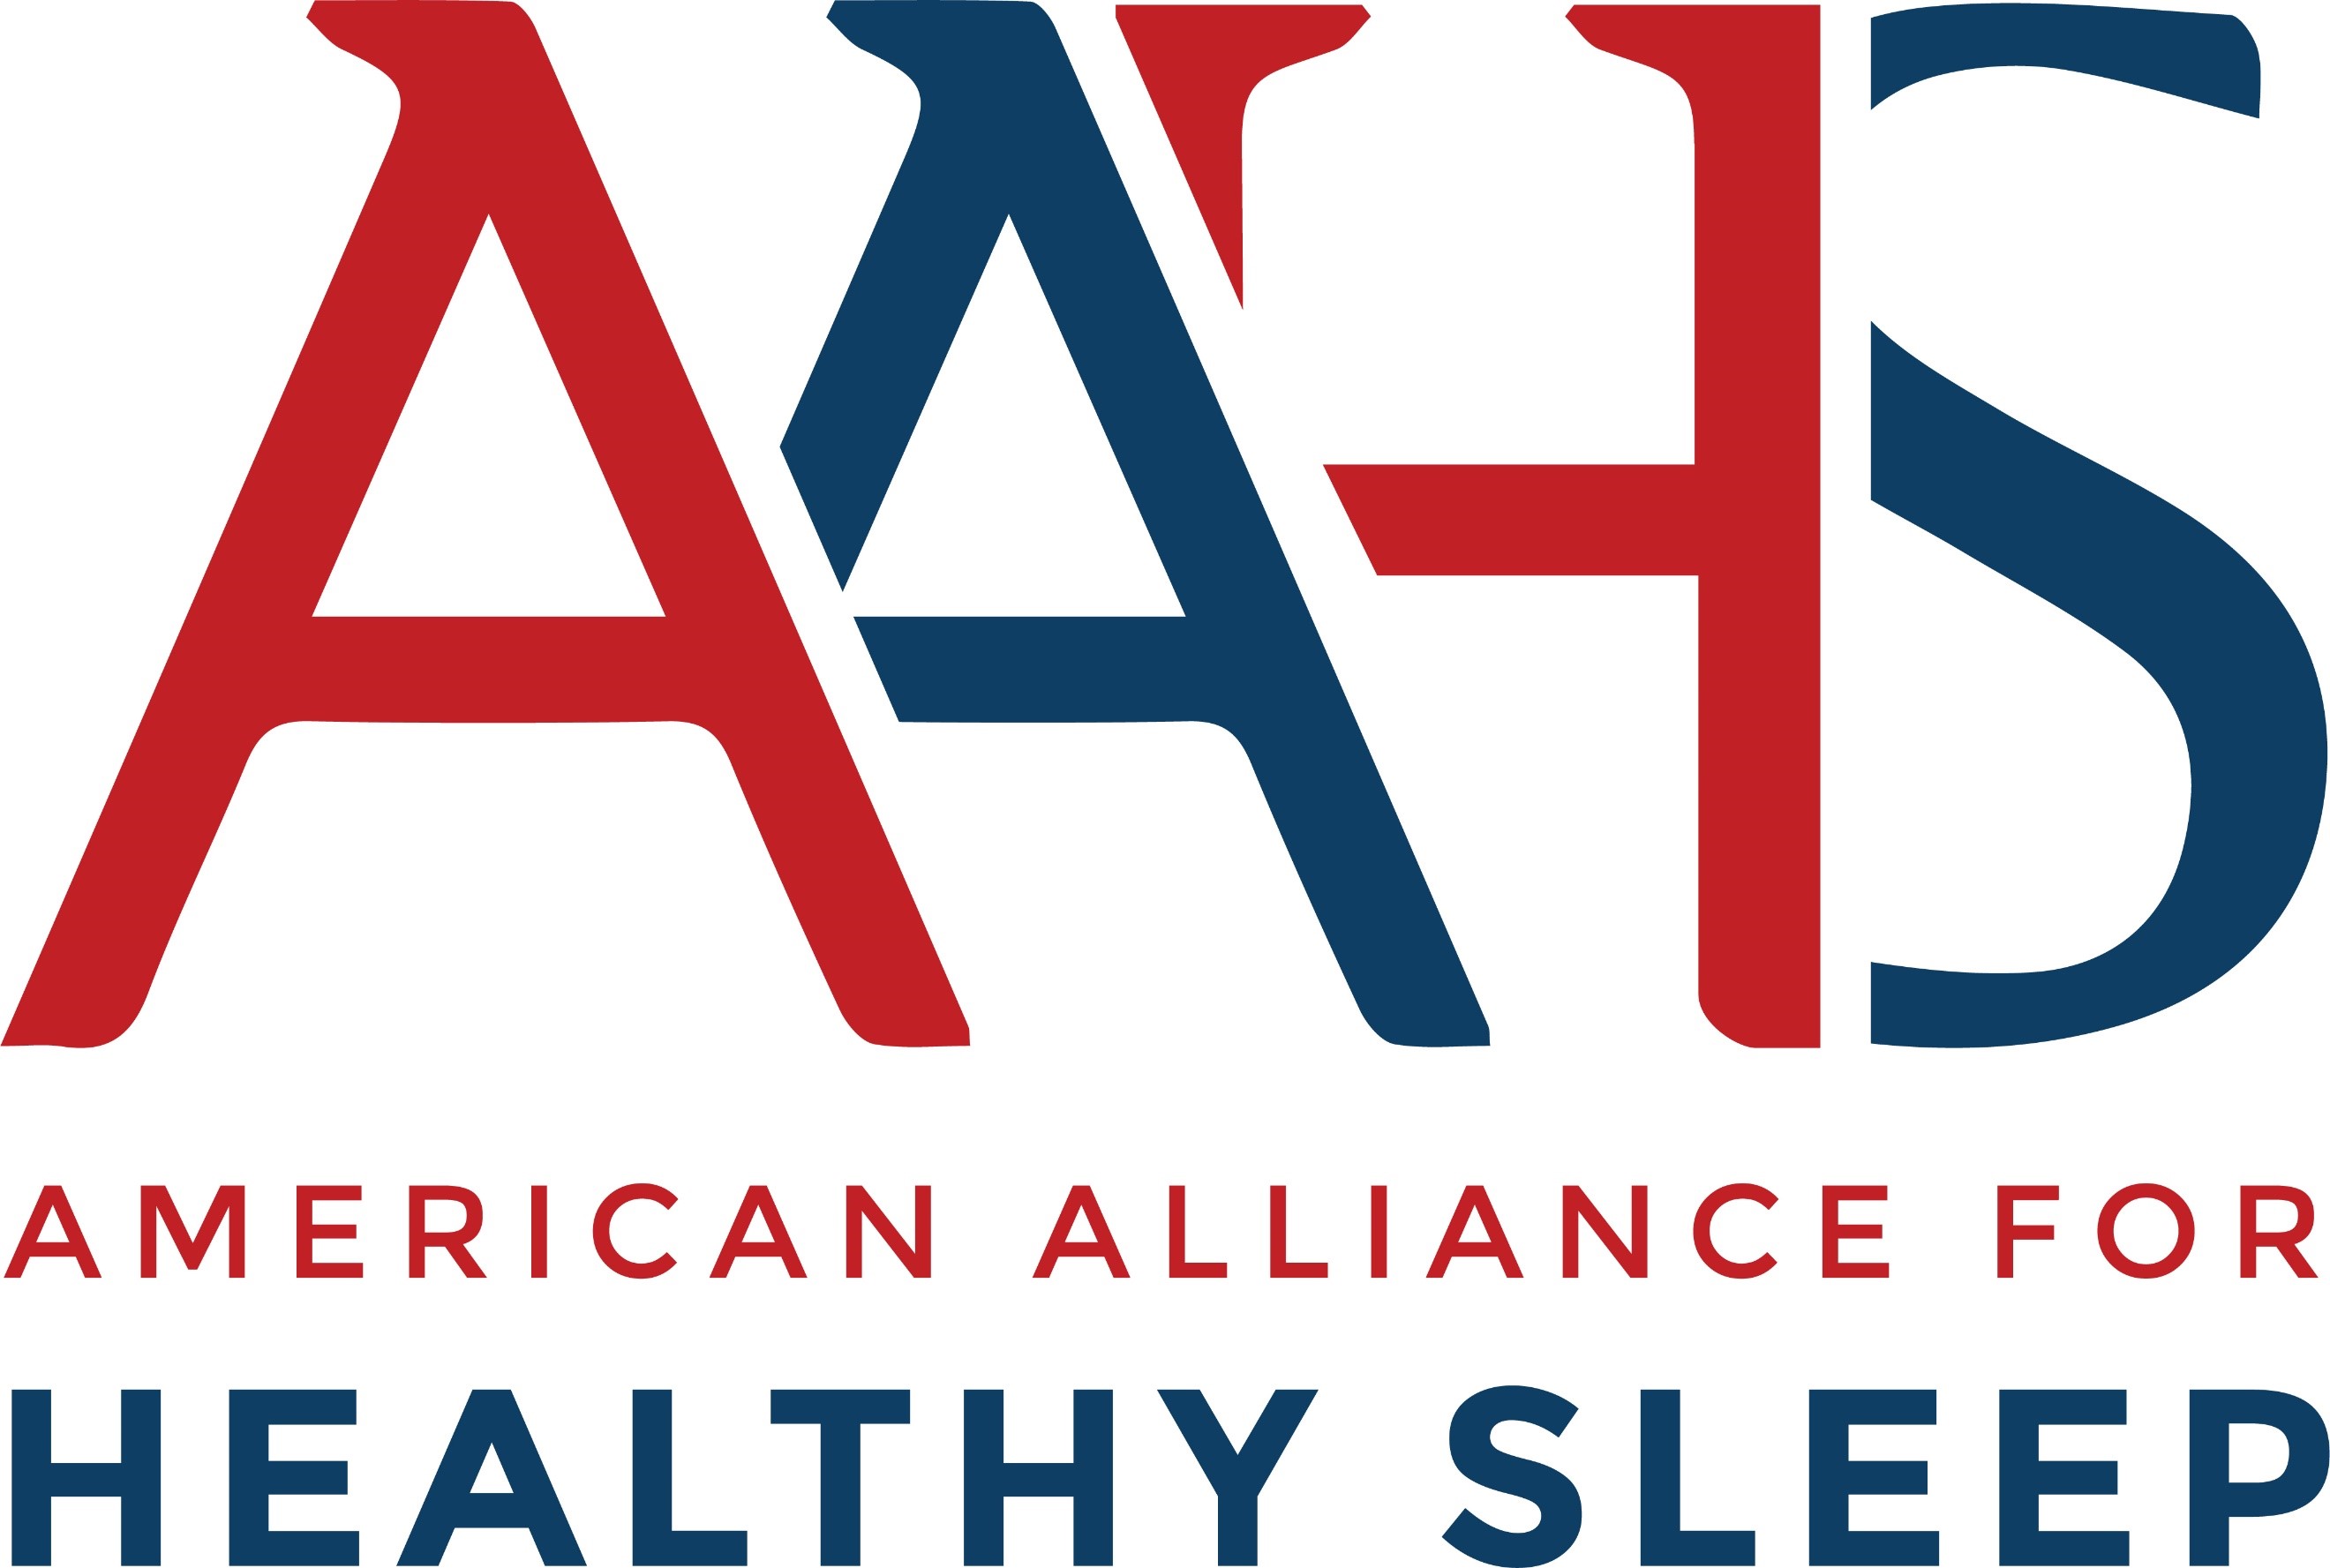 American Alliance for Healthy Sleep